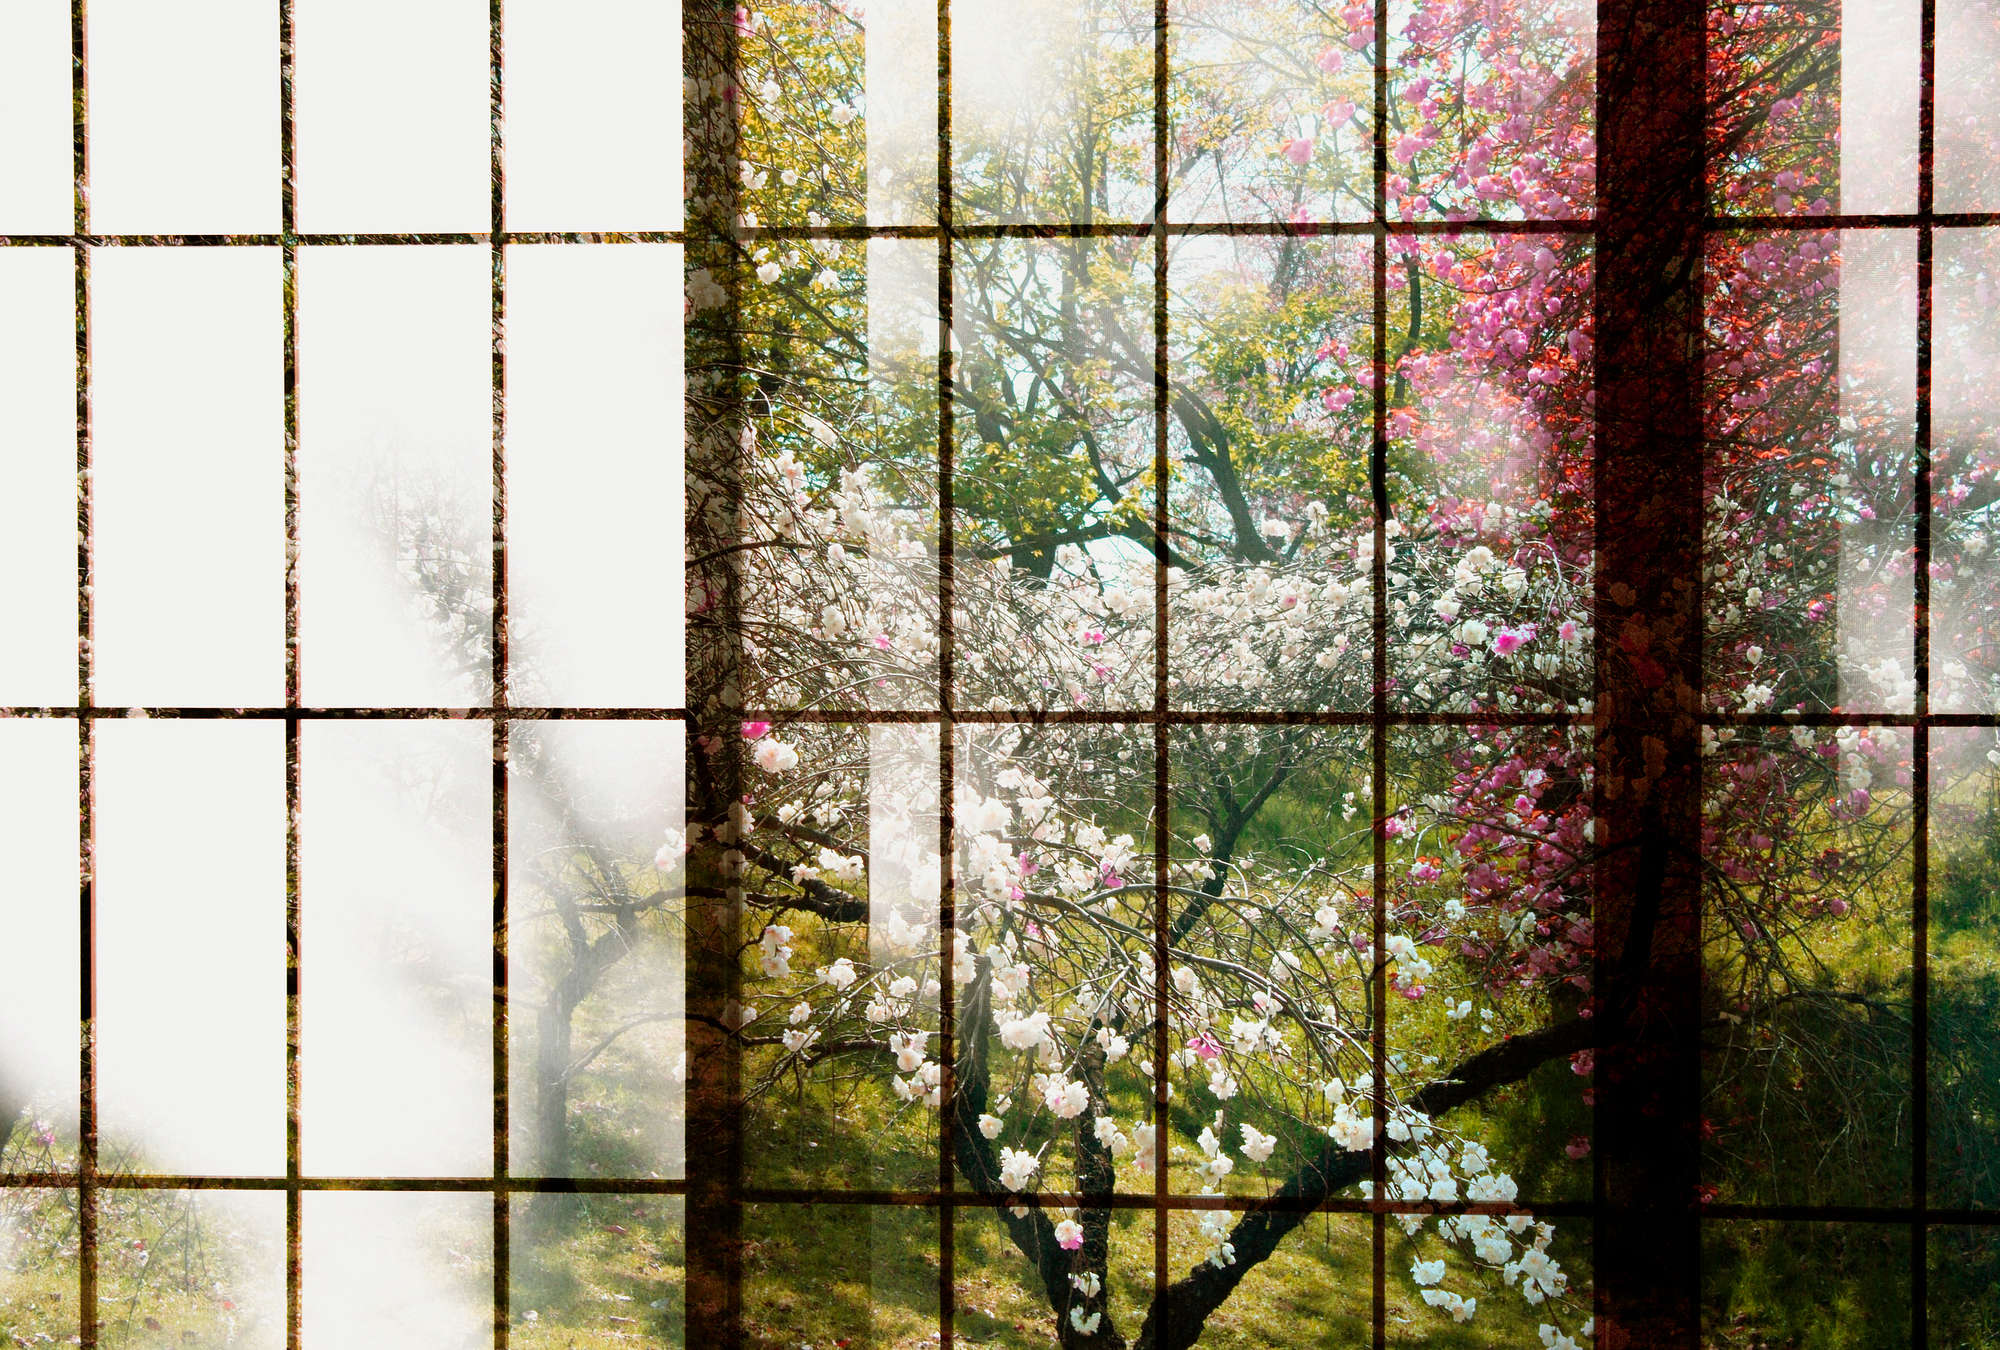             Orchard 1 - Photo wallpaper, Window with garden view - Green, Pink | Premium smooth fleece
        